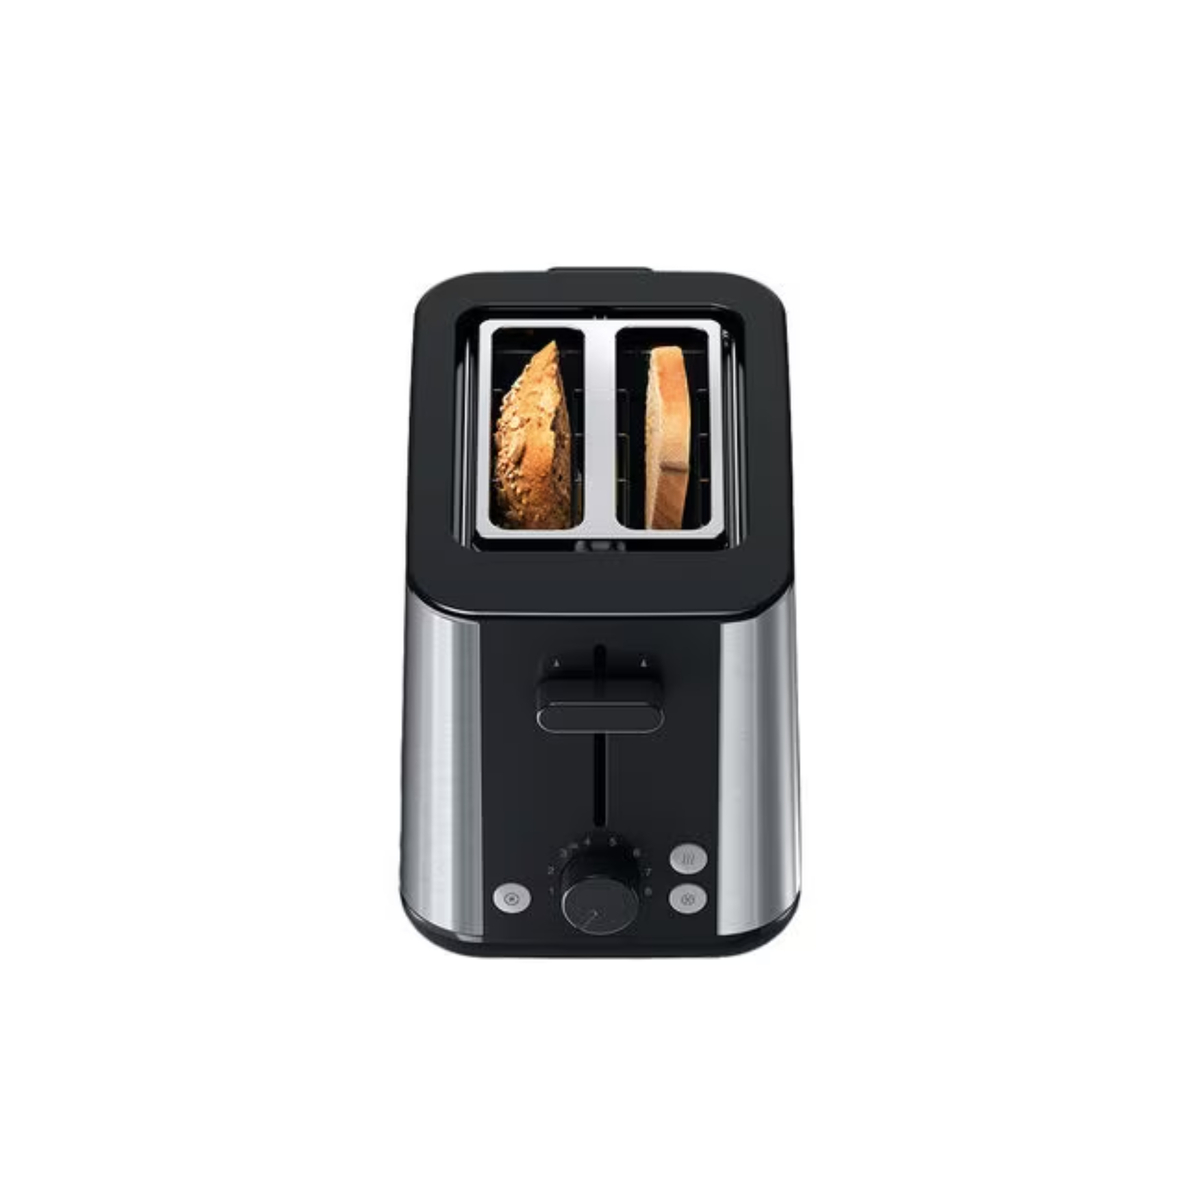 Braun PurShine Toaster, Black, HT 1510